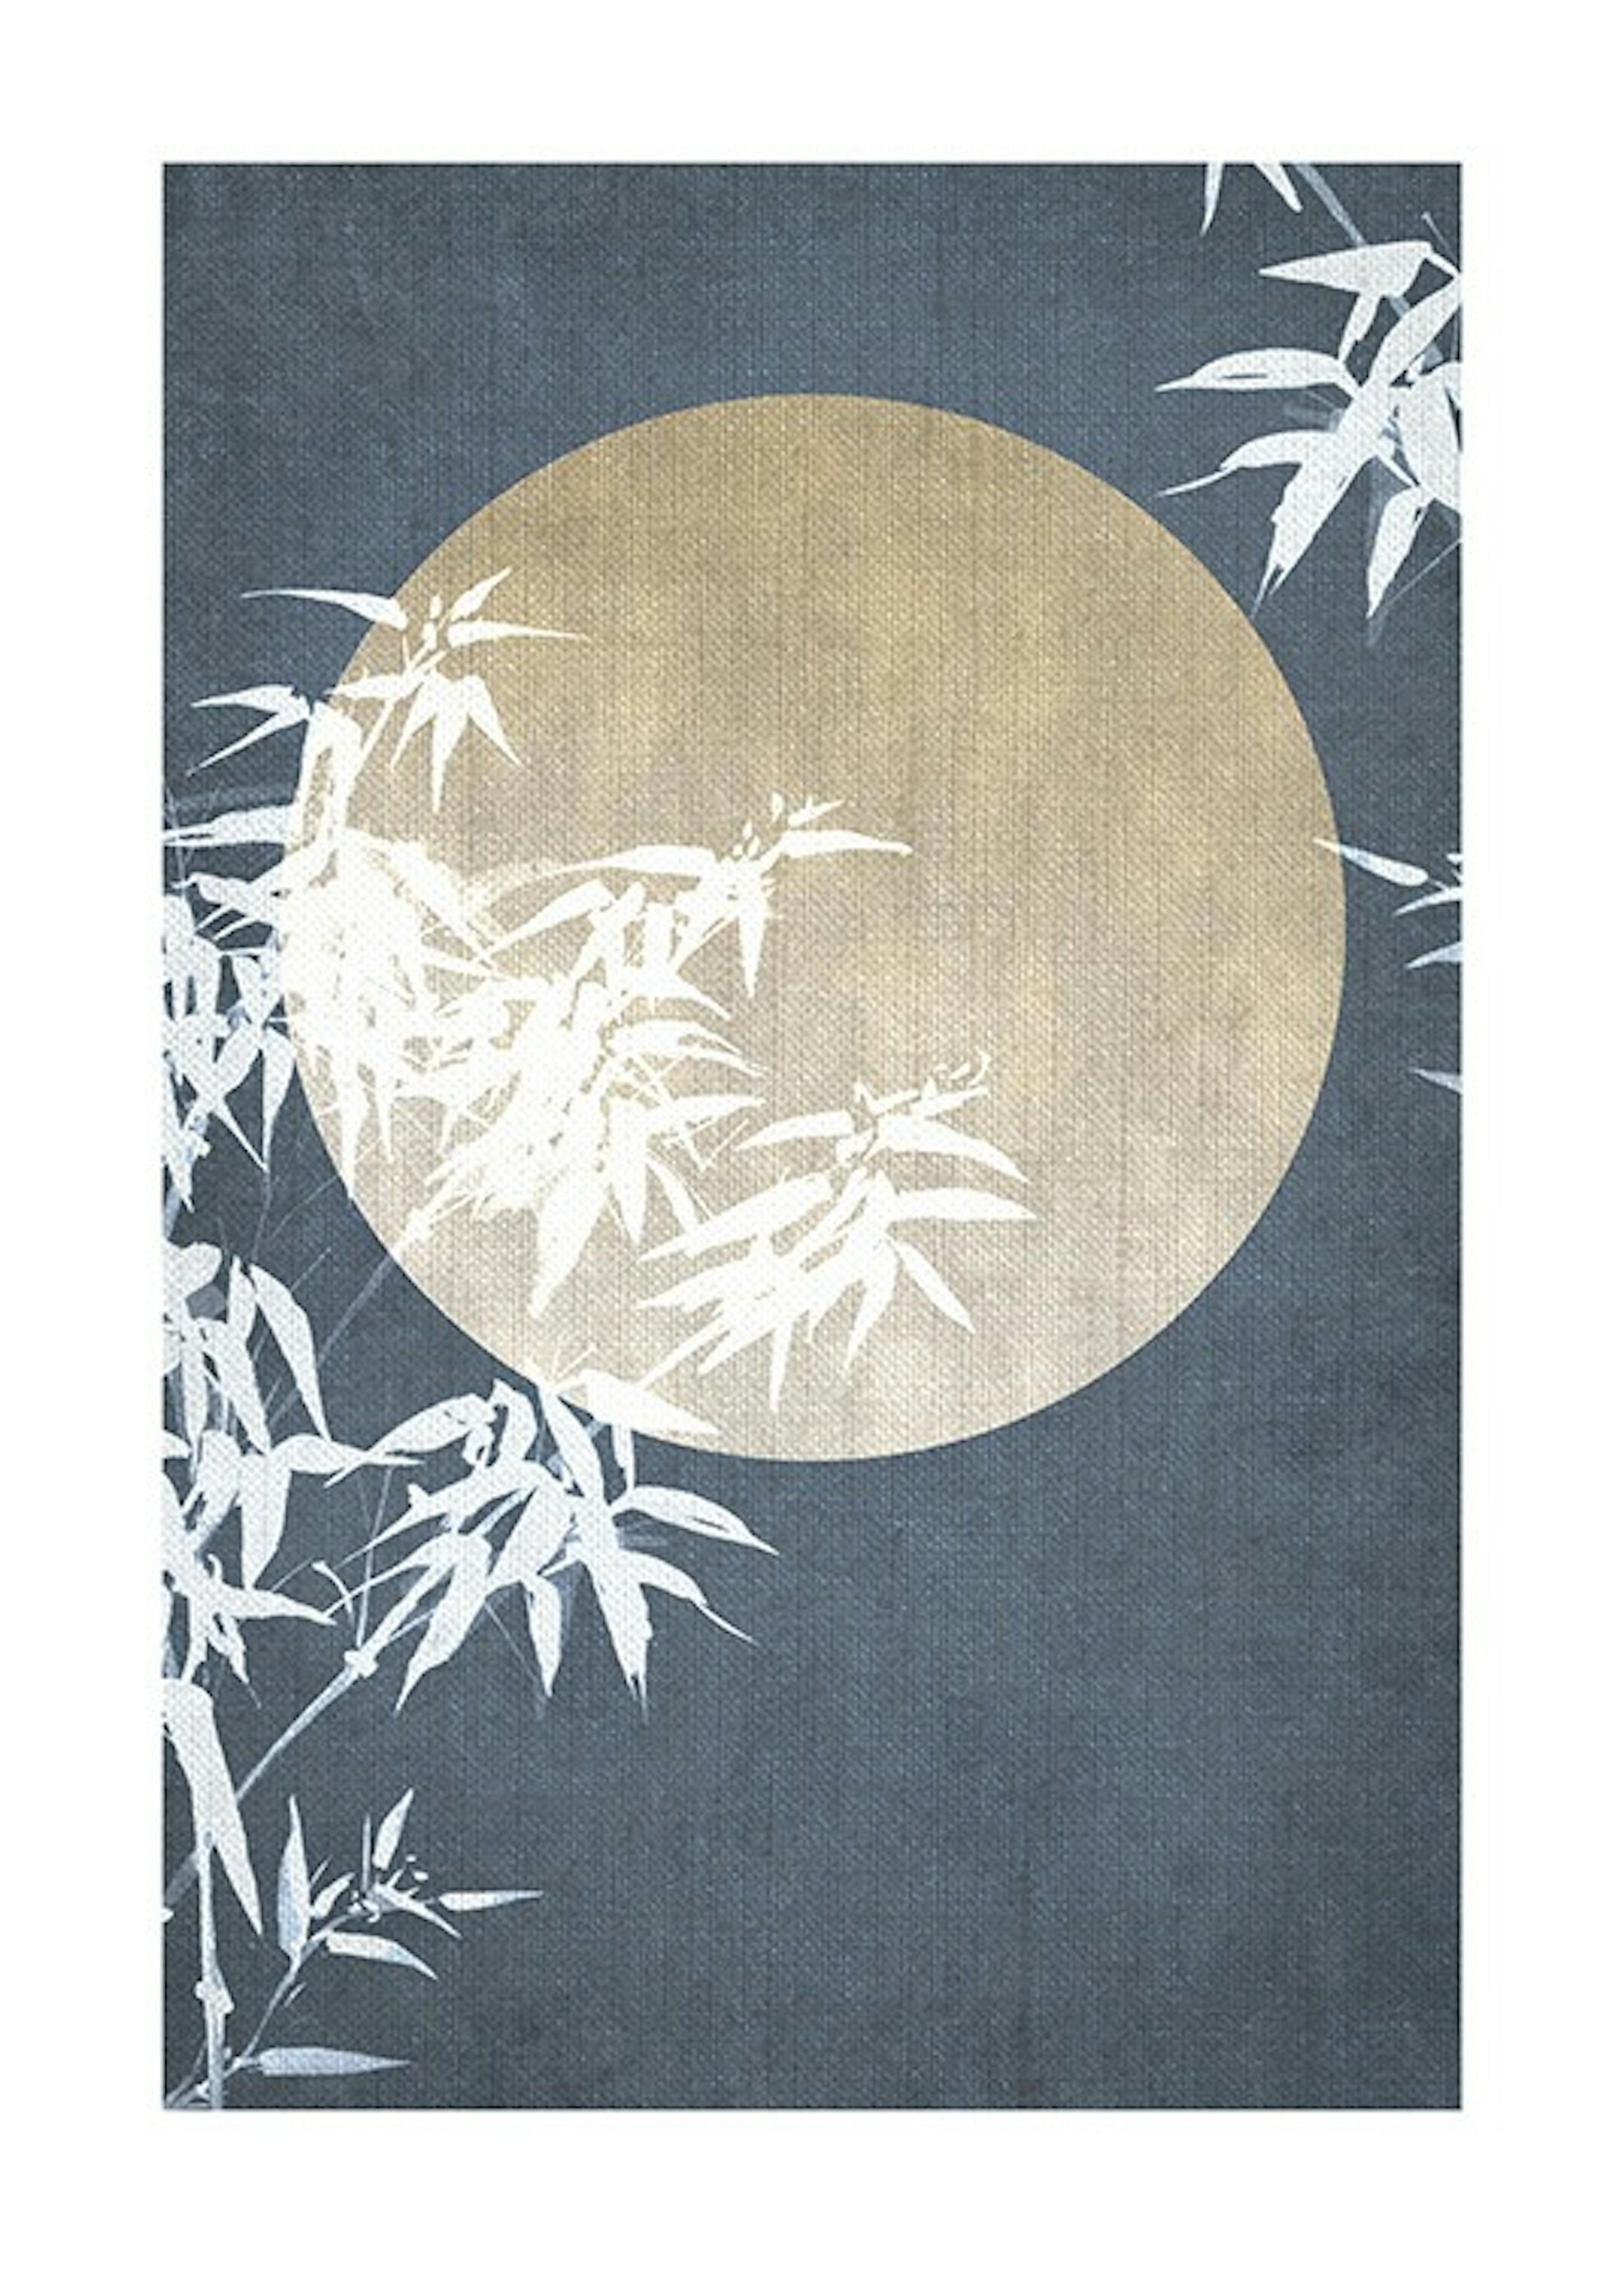 Moon Night Sky No2 Poster